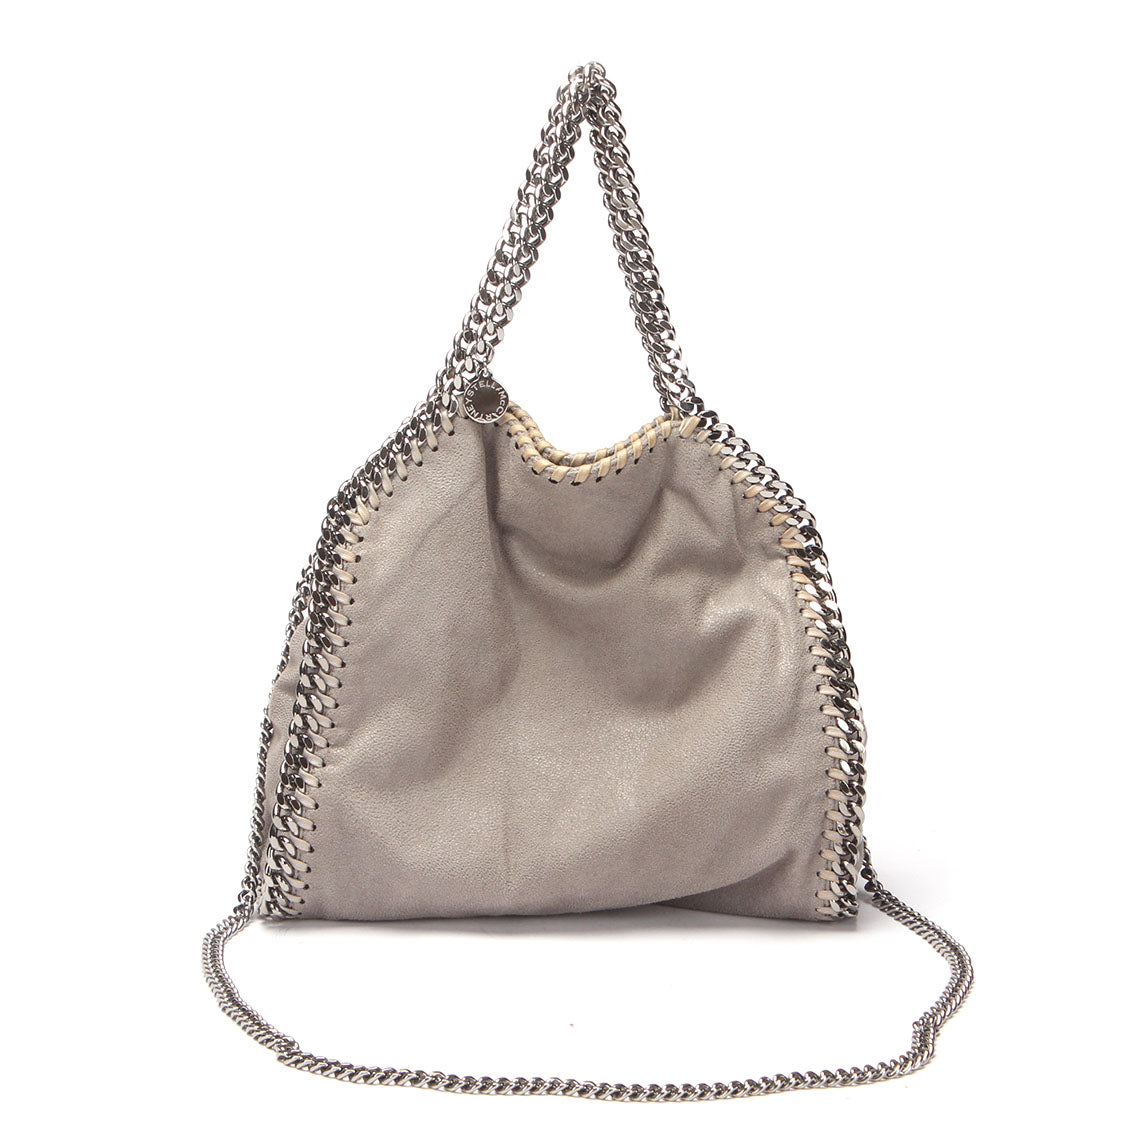 Stella Mccartney Falabella Tote Bag Cotton Shoulder Bag in Fair condition